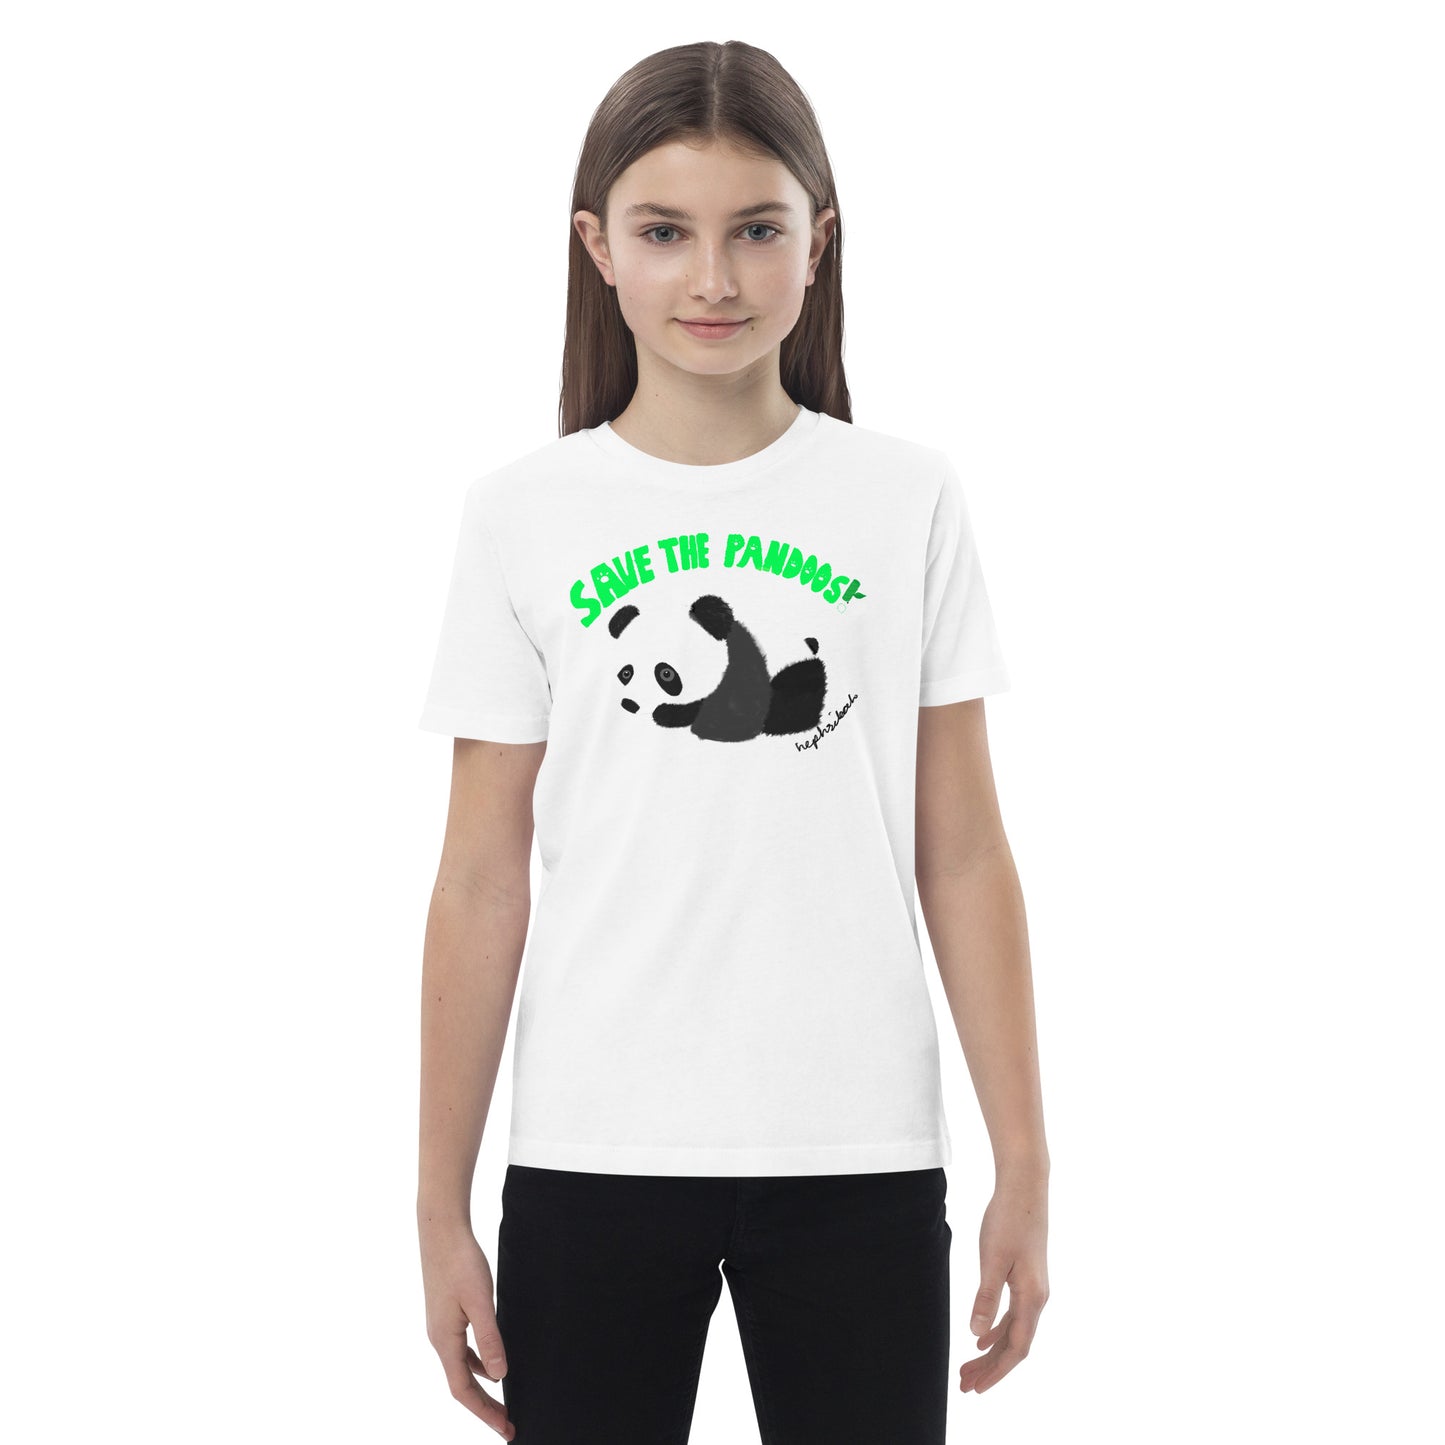 Save the Pandoos! Organic Cotton kids t-shirt